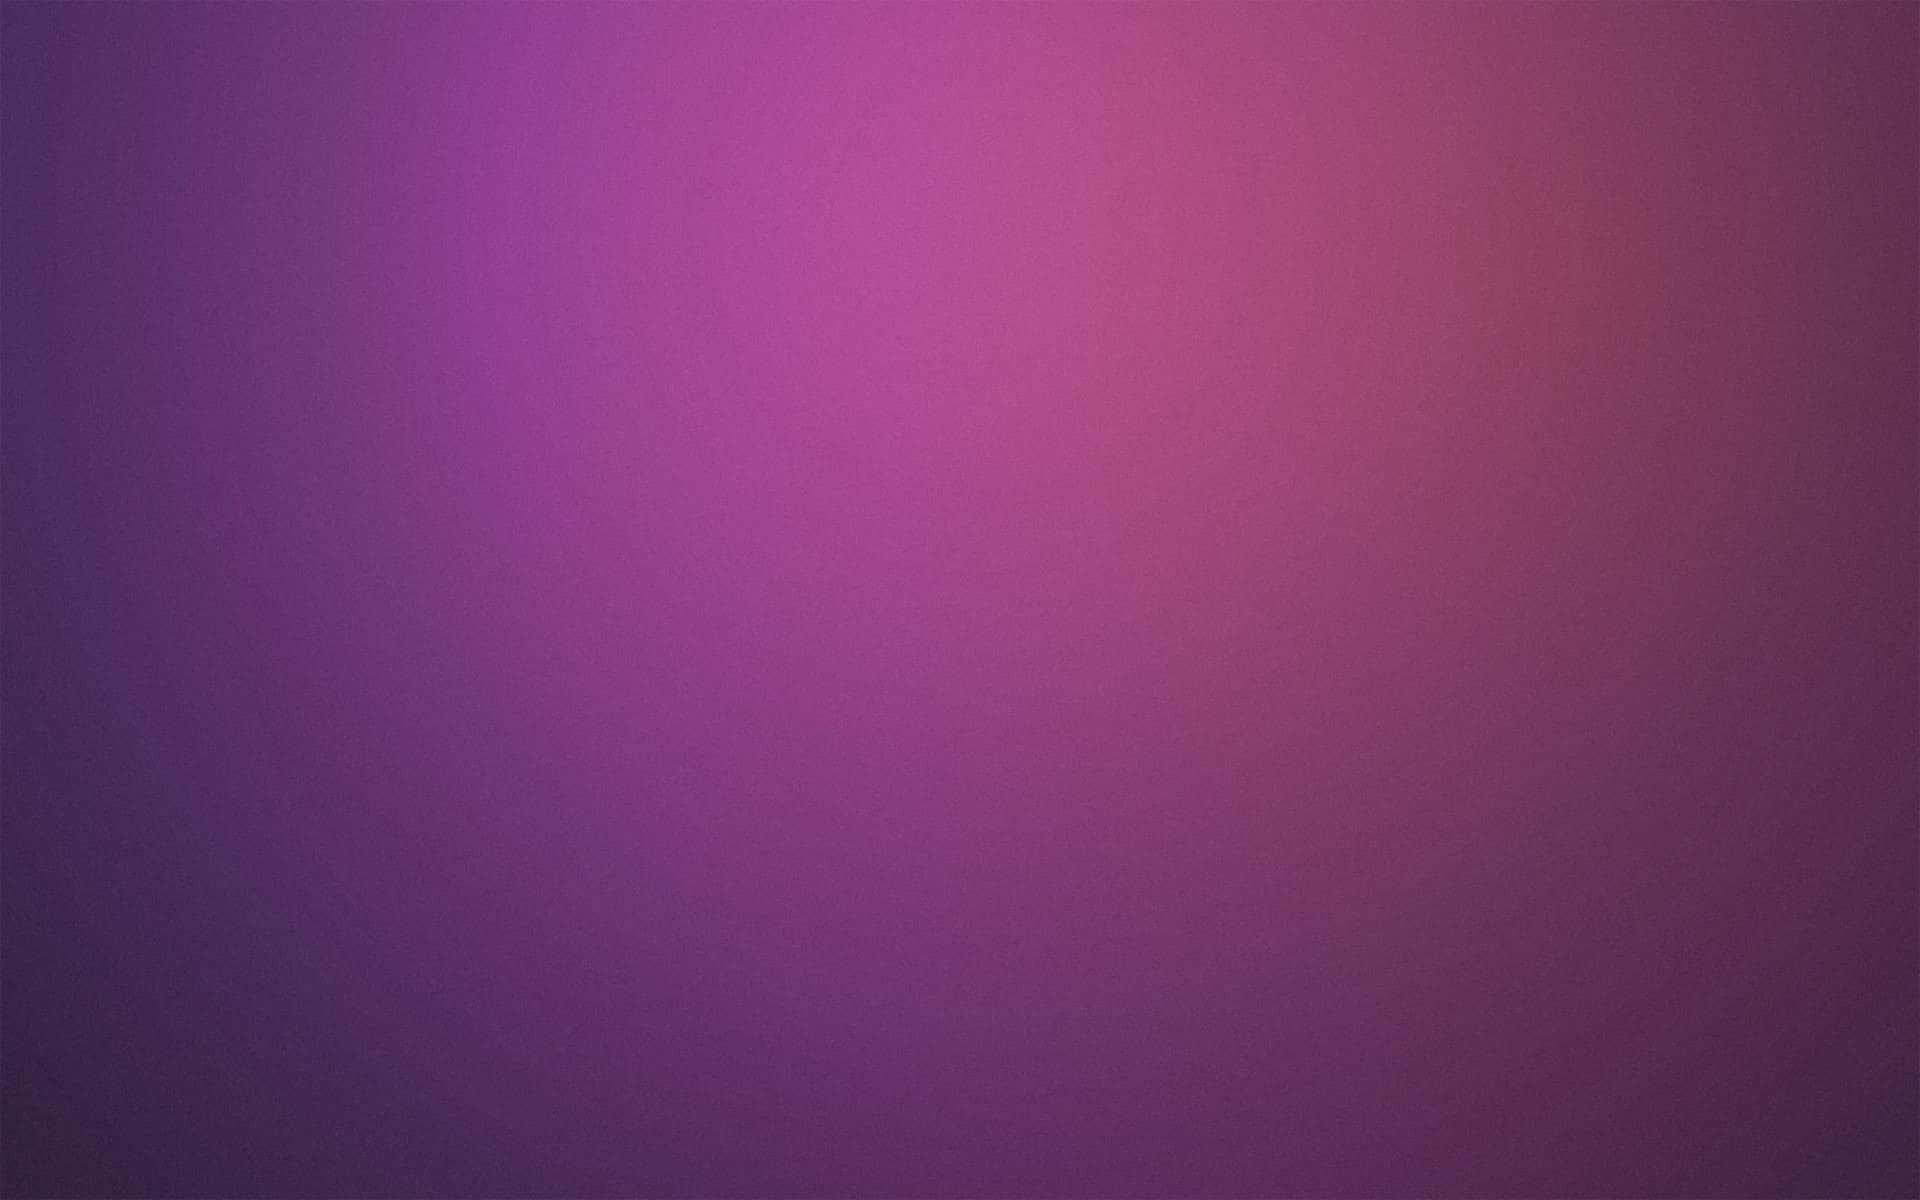 Colorful Violet Burst on a Light Gray Background